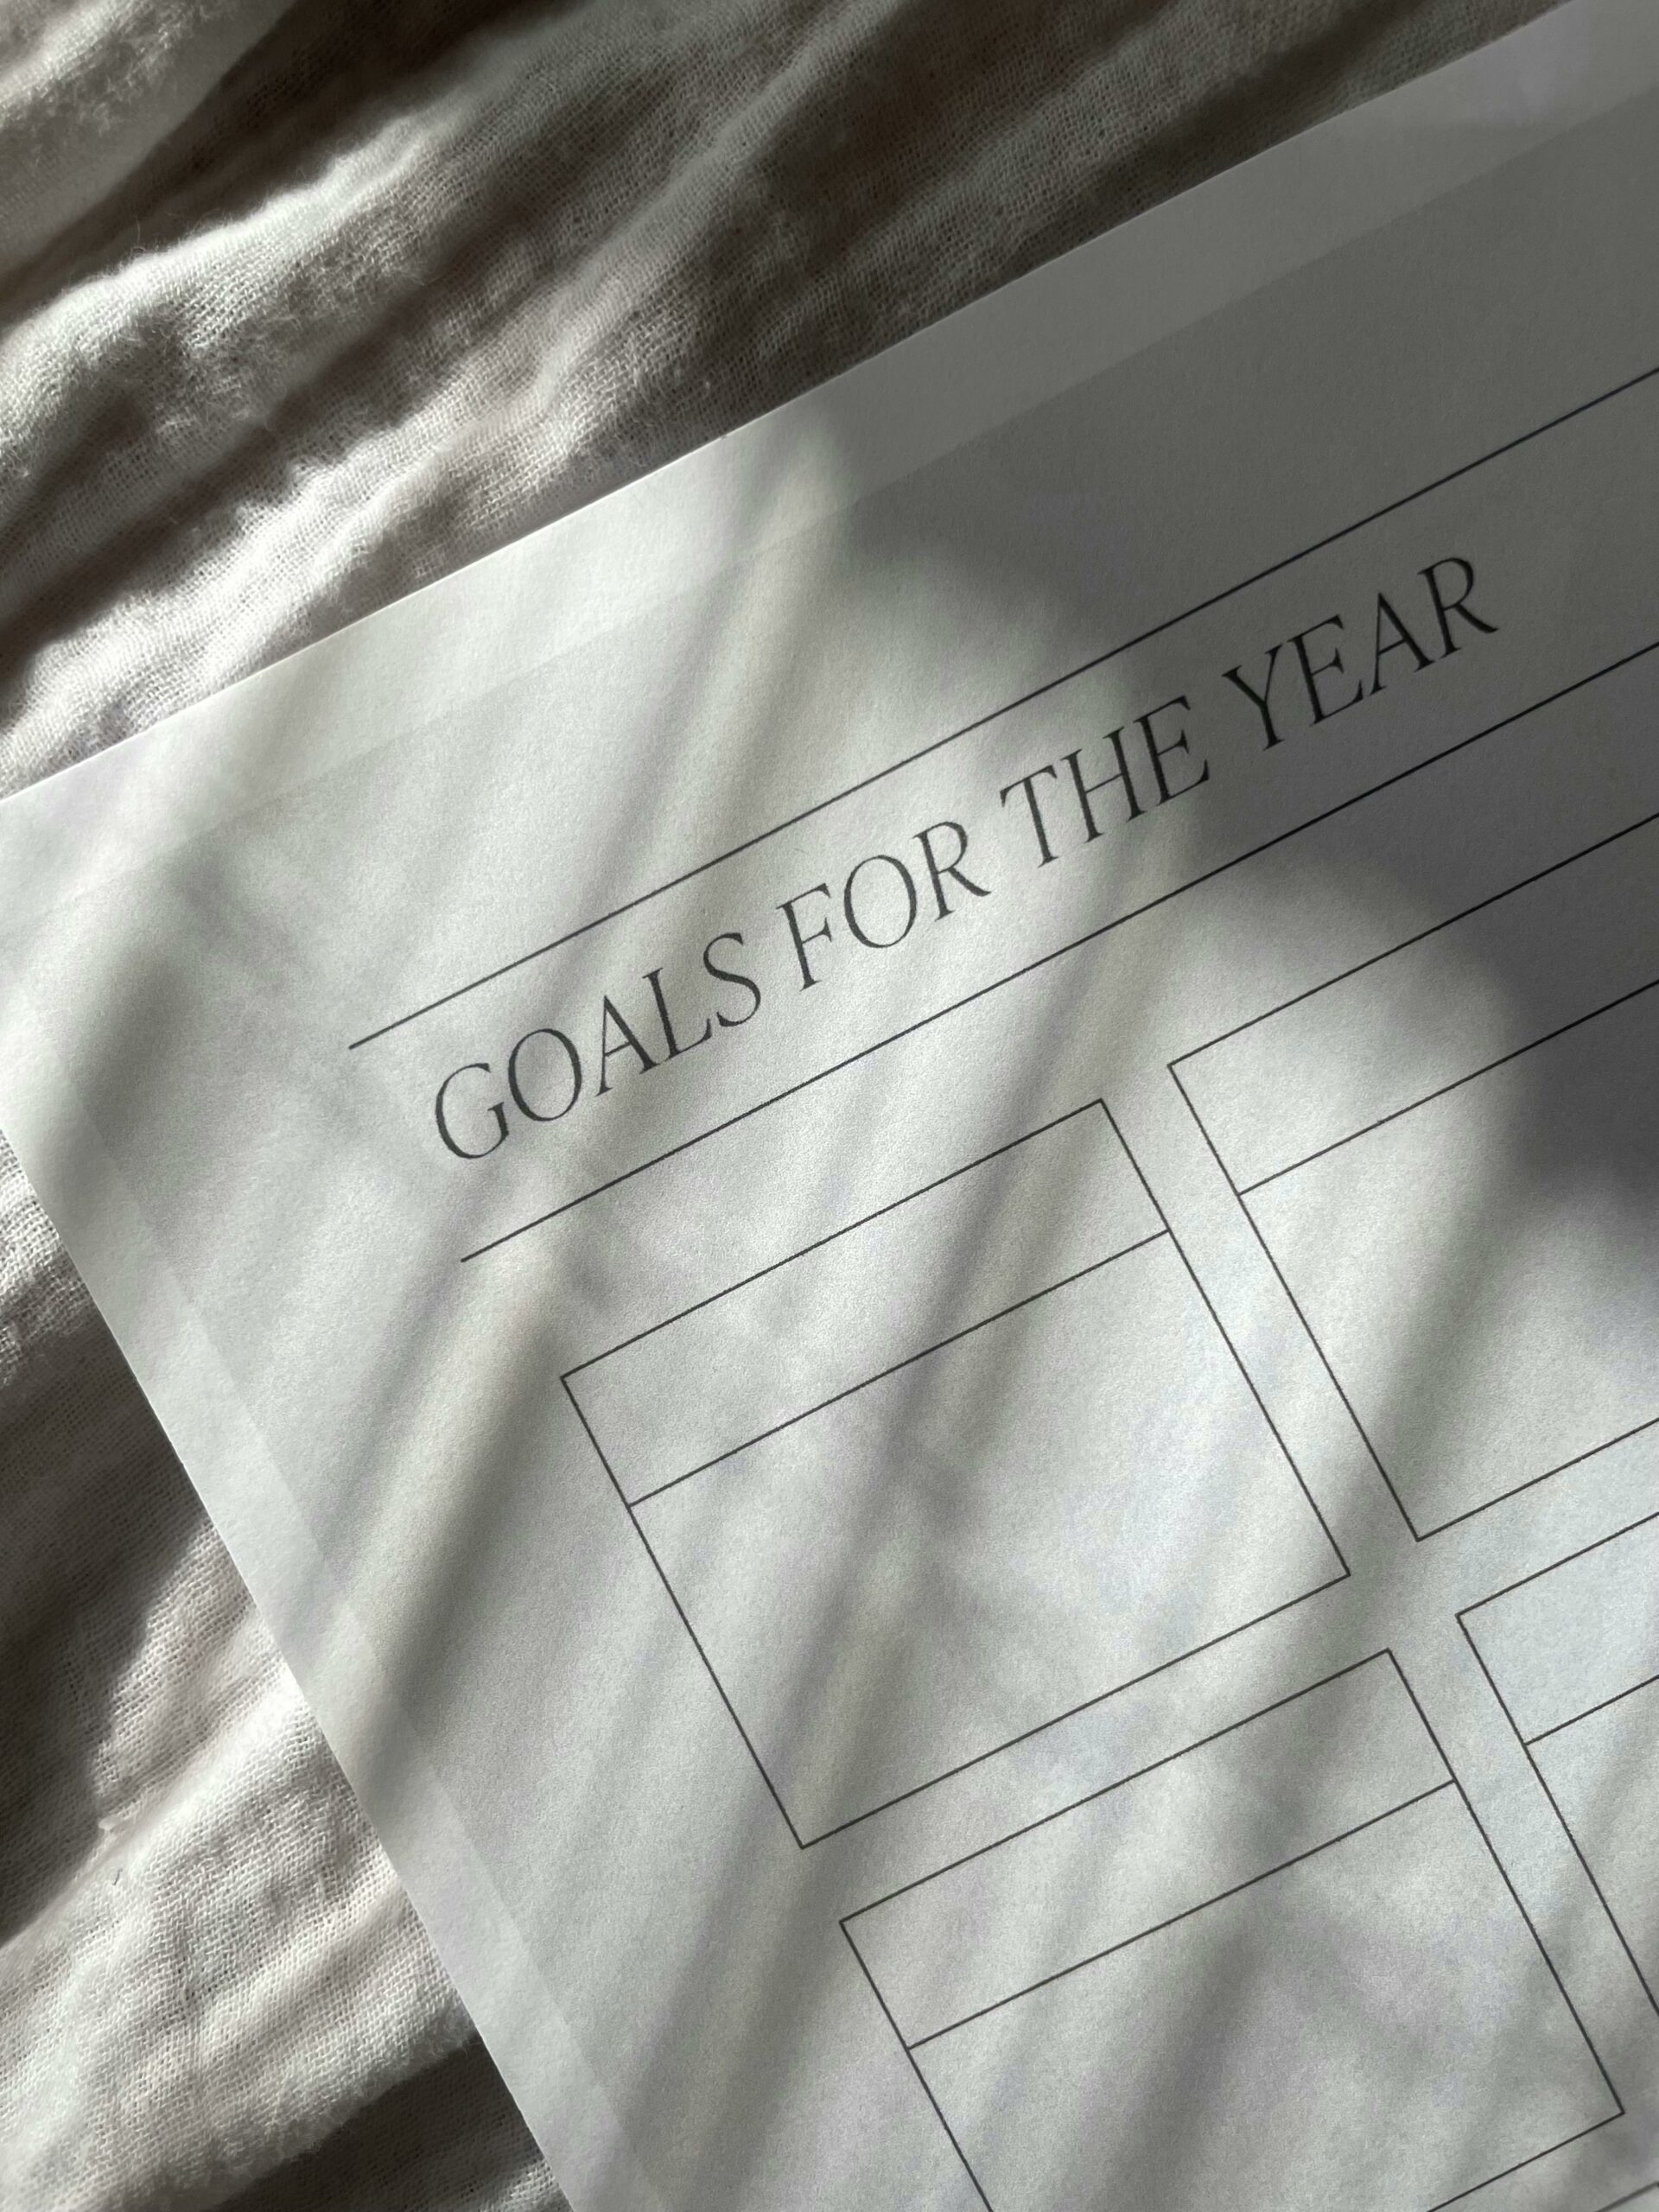 Yearly goal setting sheet